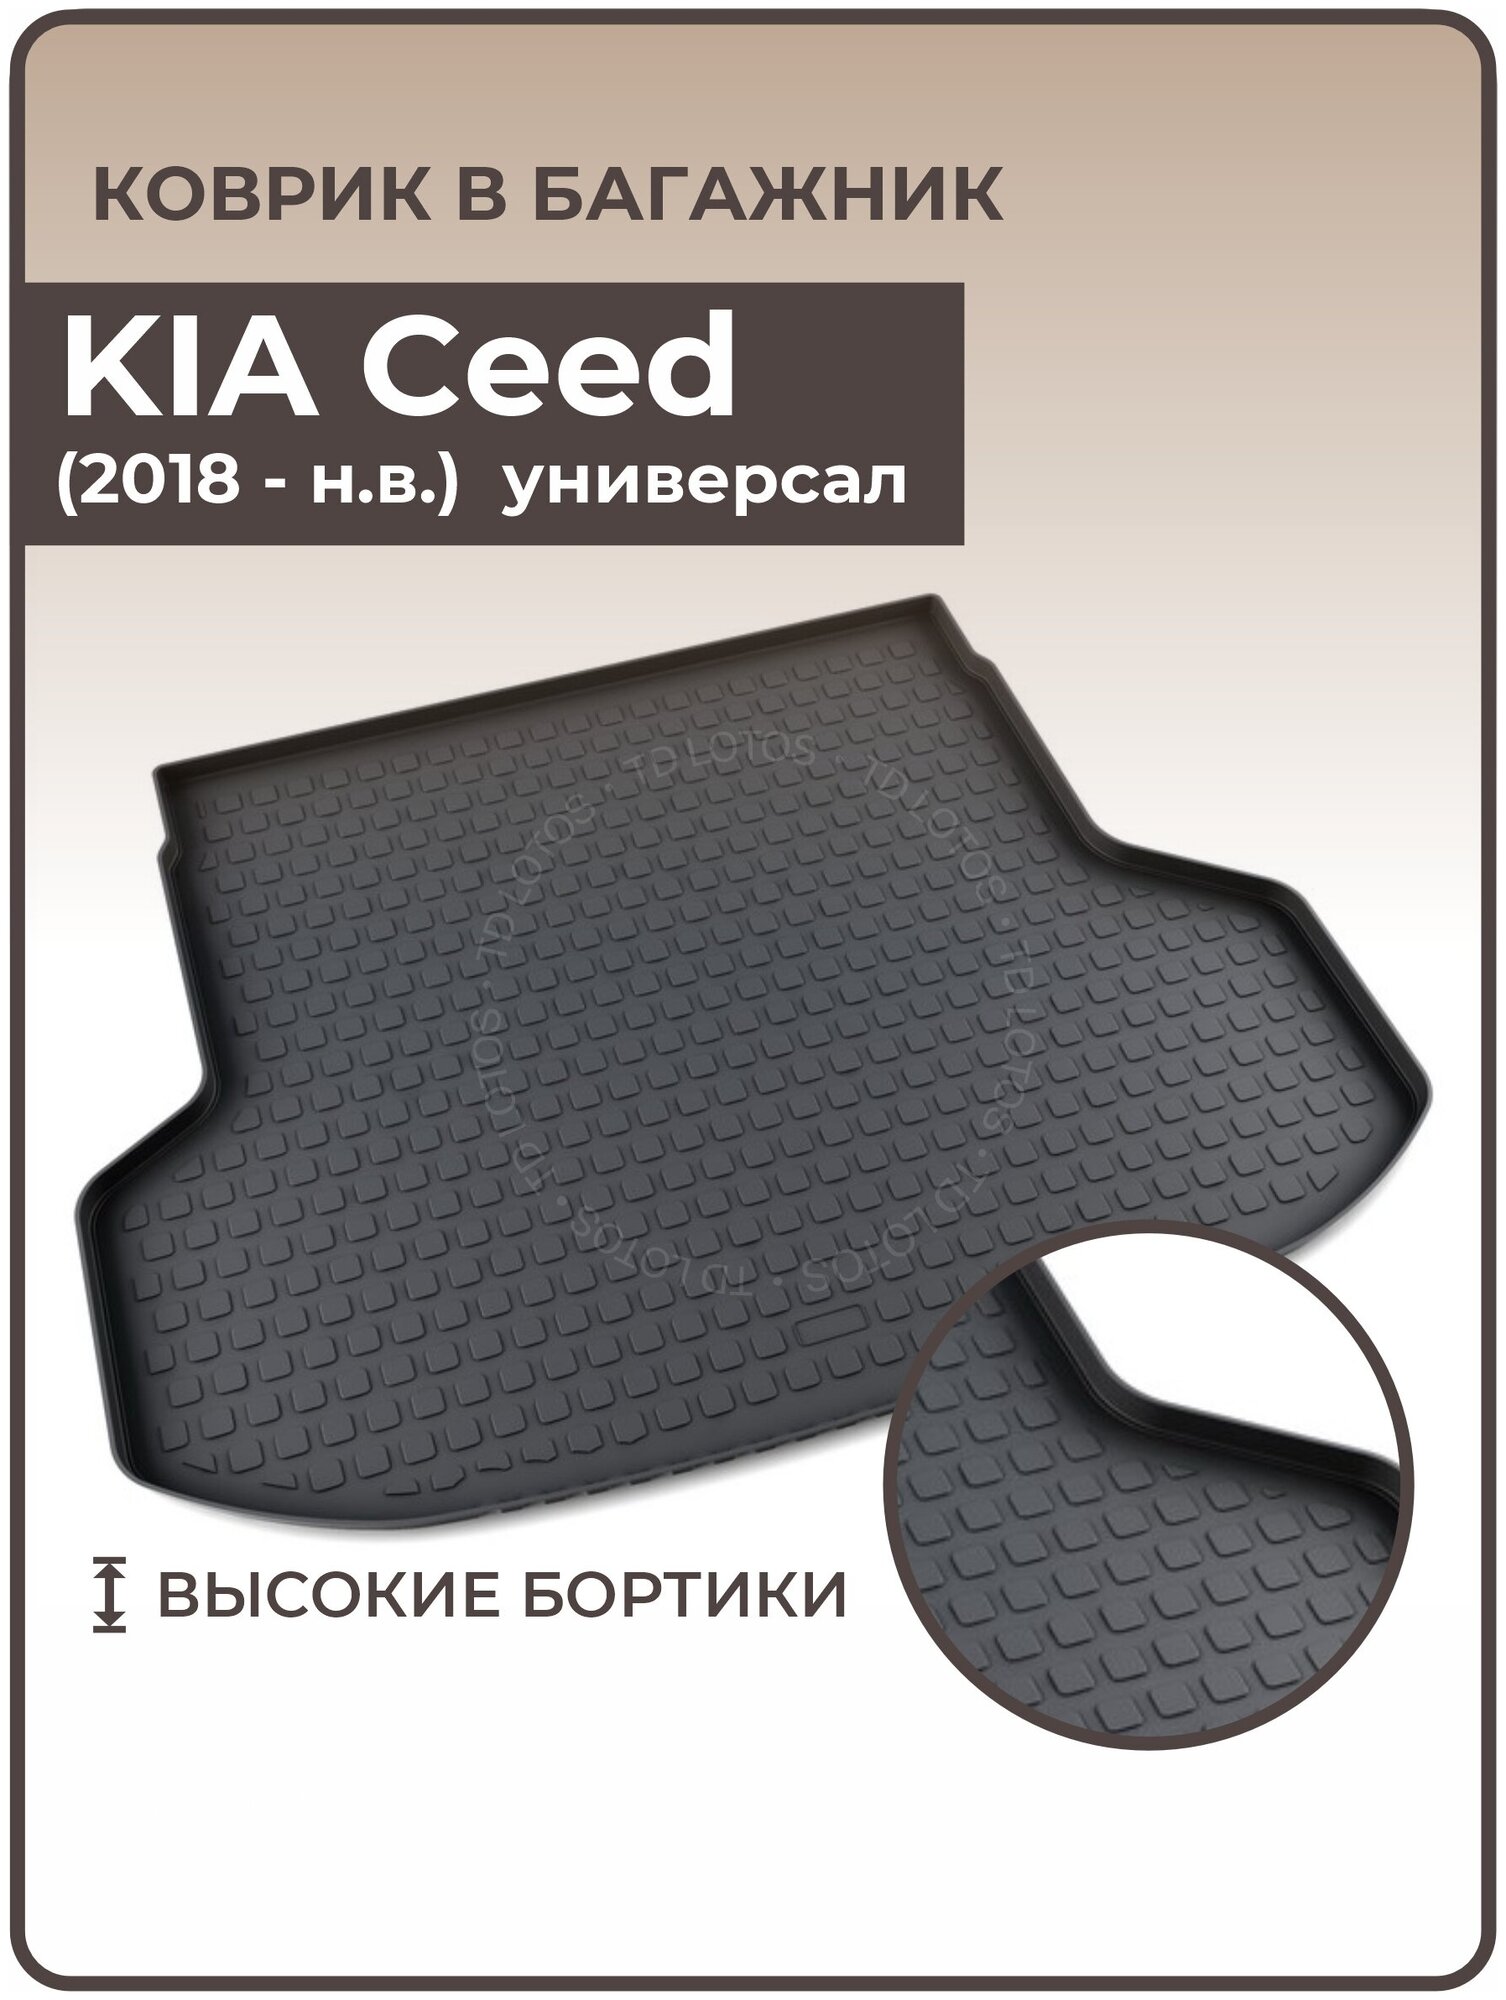 Коврики 3D в багажник автомобиля KIA Ceed универсал (2018 — н. в.)